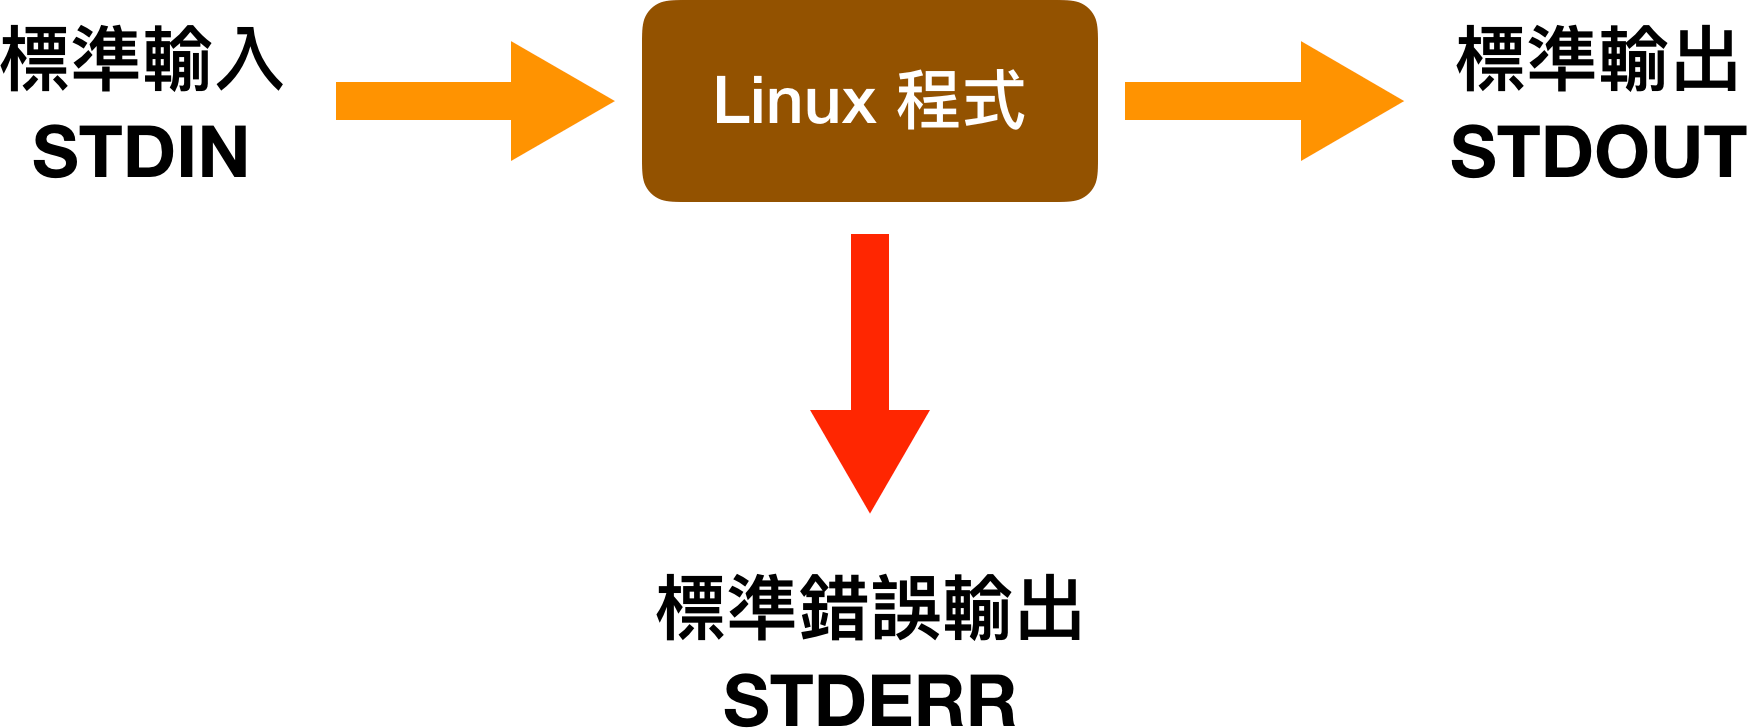 Linux I O 輸入與輸出重新導向 基礎概念教學 G T Wang